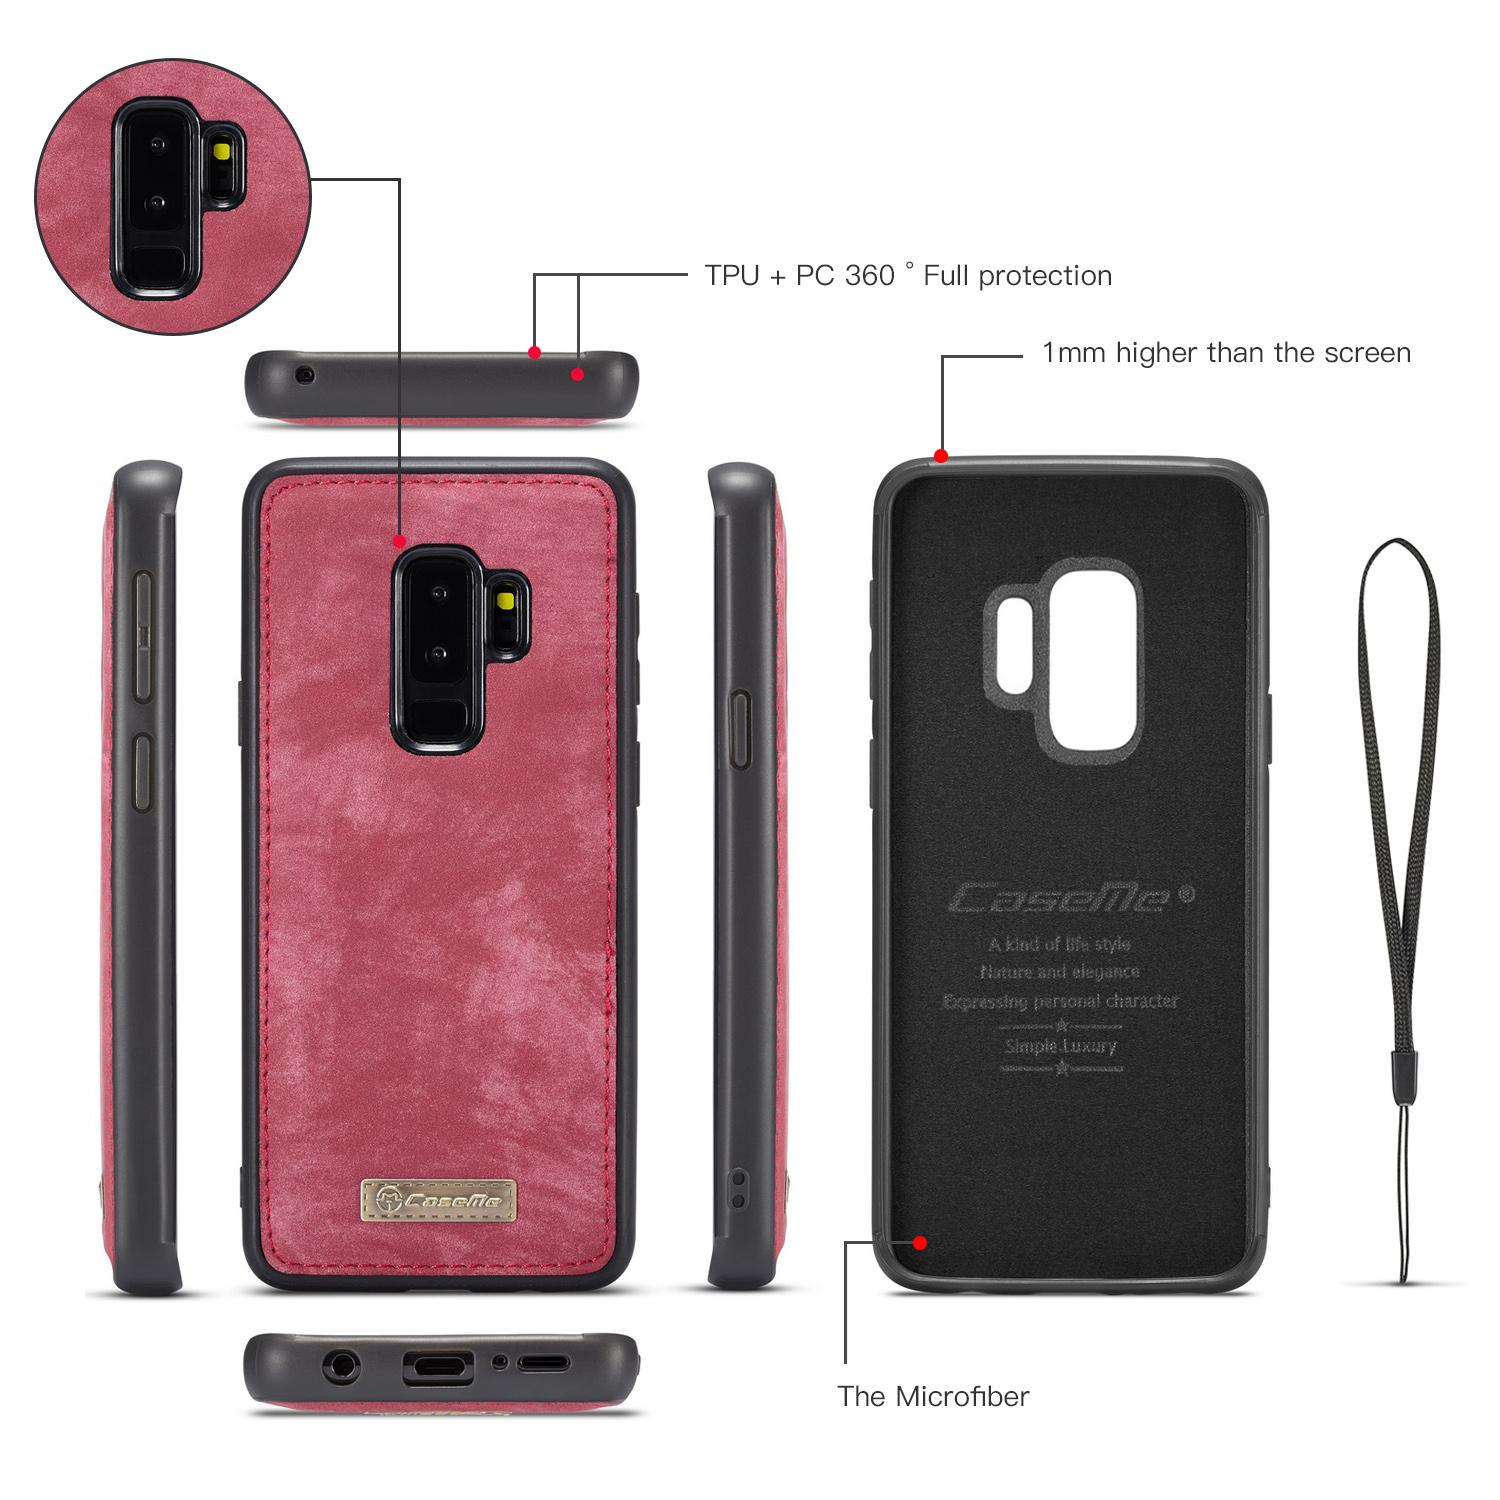 Multi-slot Plånboksfodral Galaxy S9 Plus röd